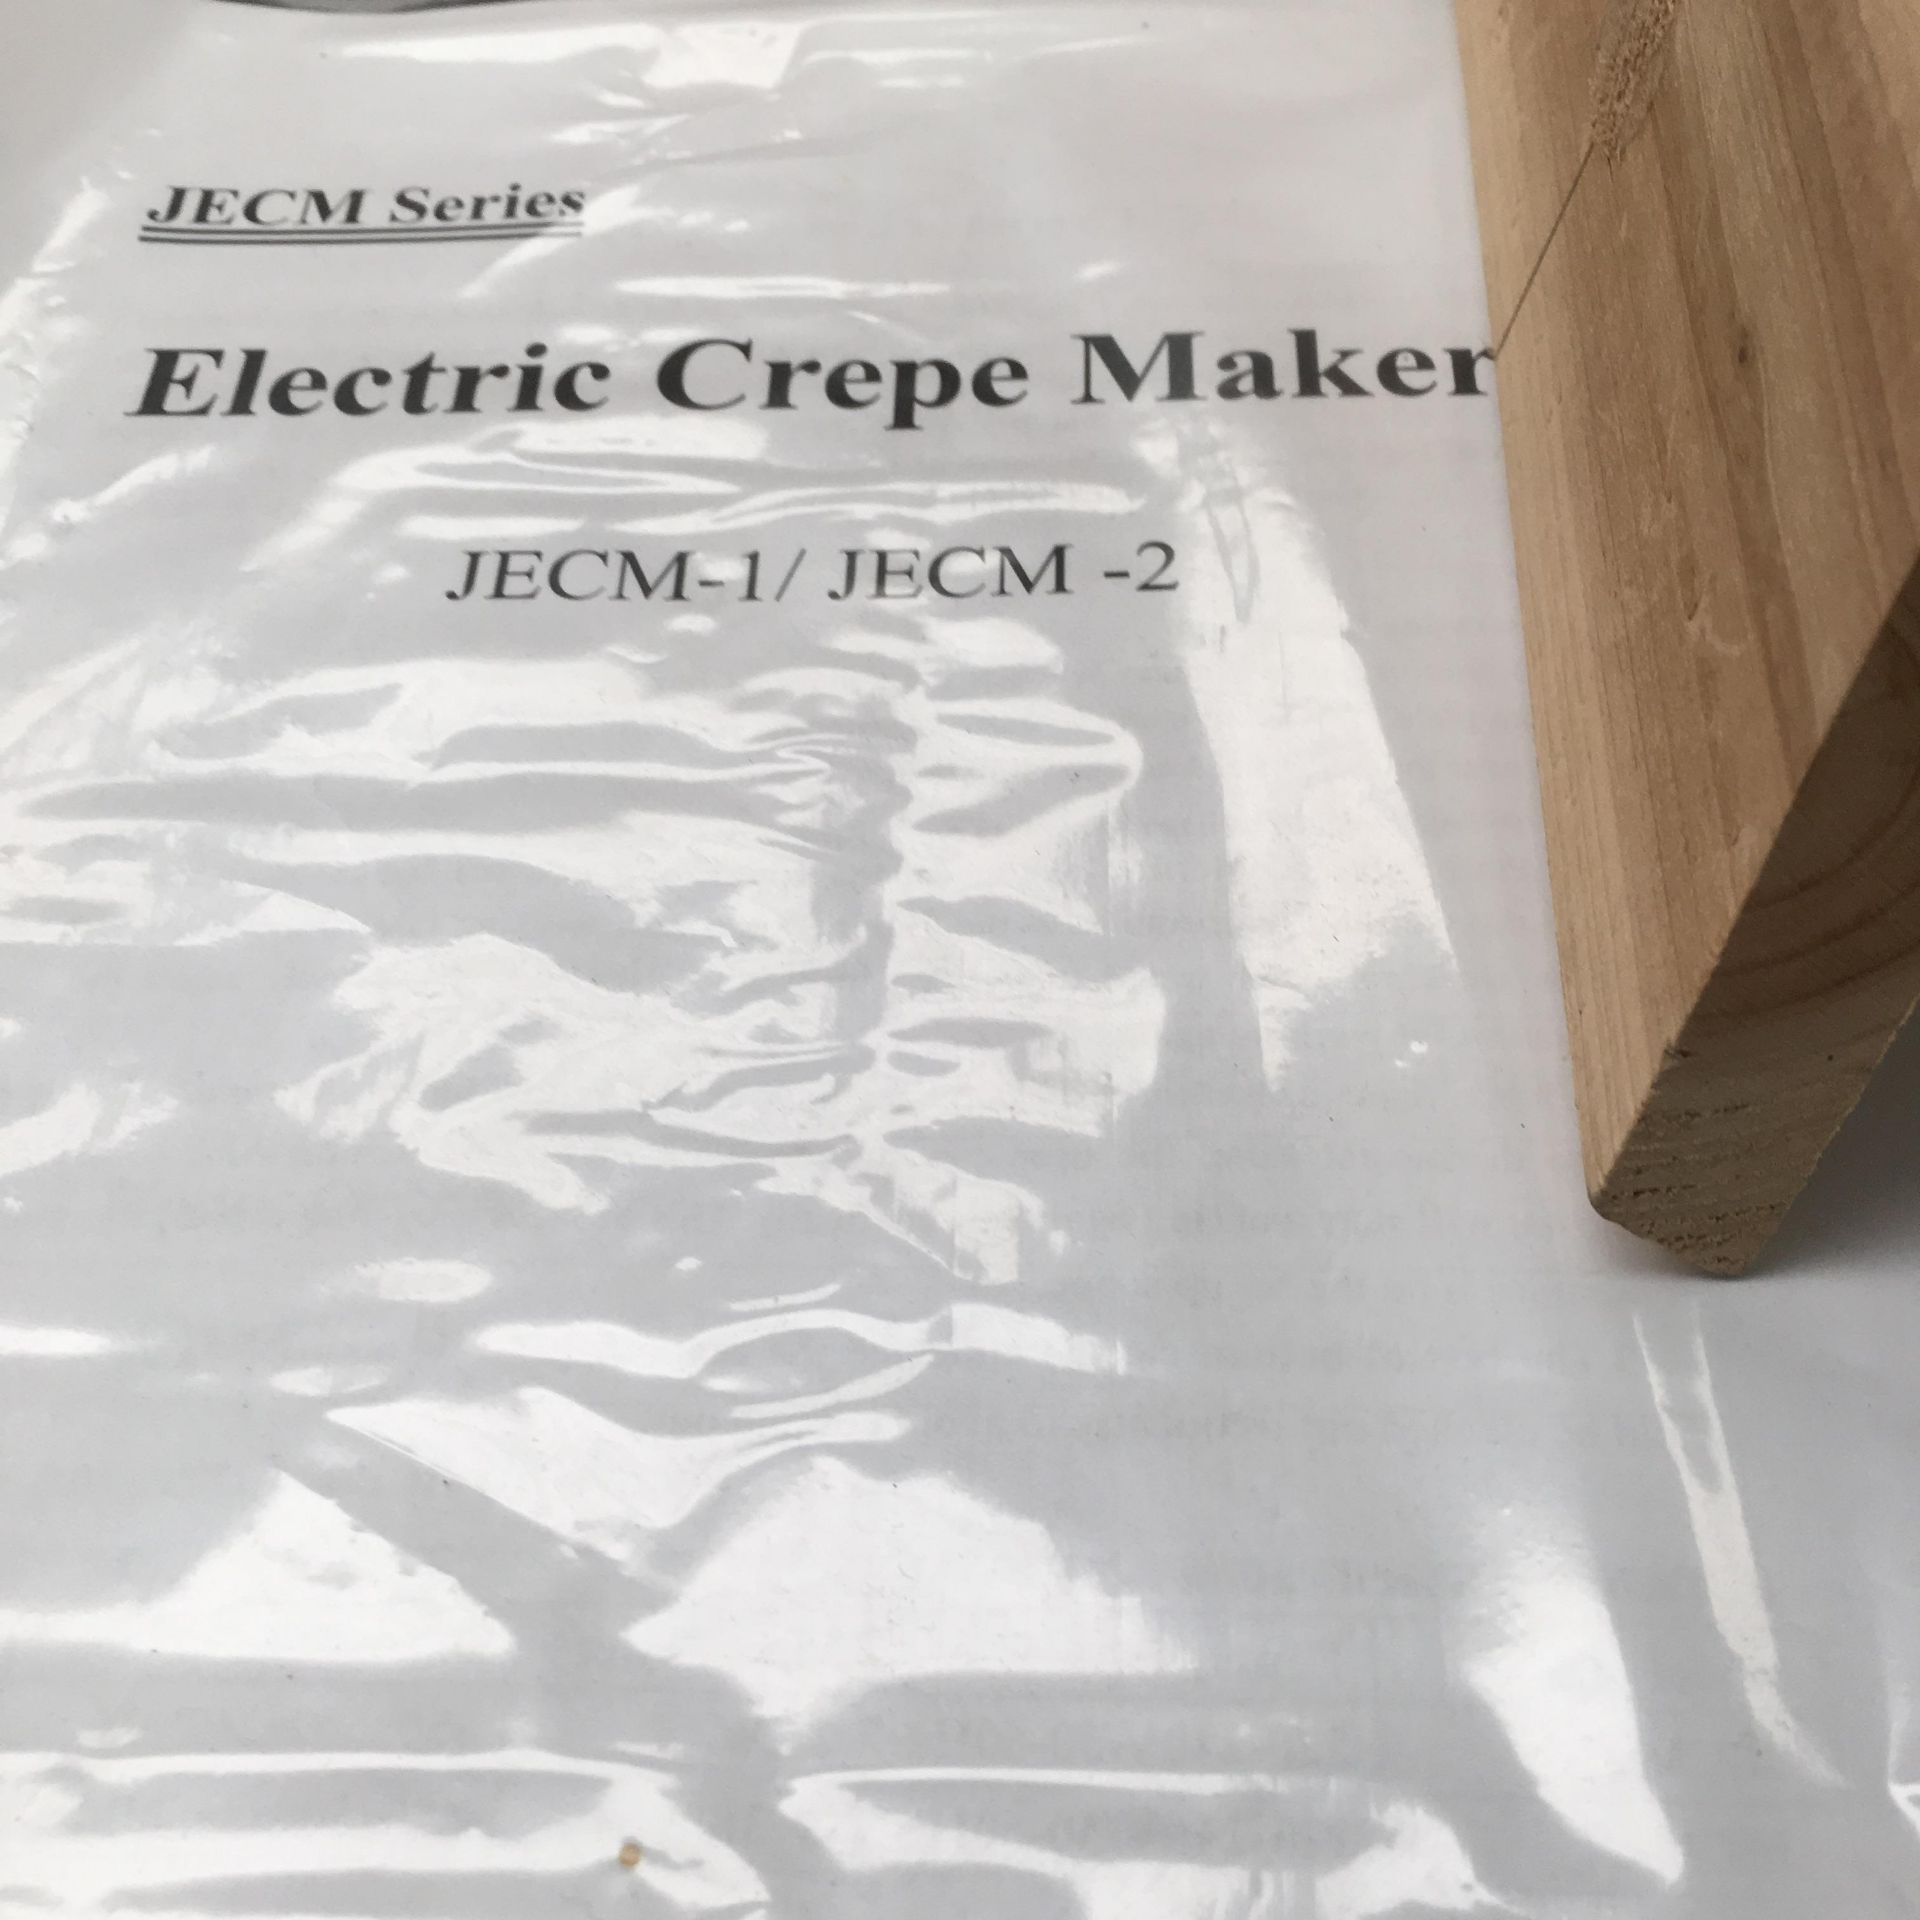 New Electric Crepe Maker..Boxed..420 mm Diameter - Image 3 of 3